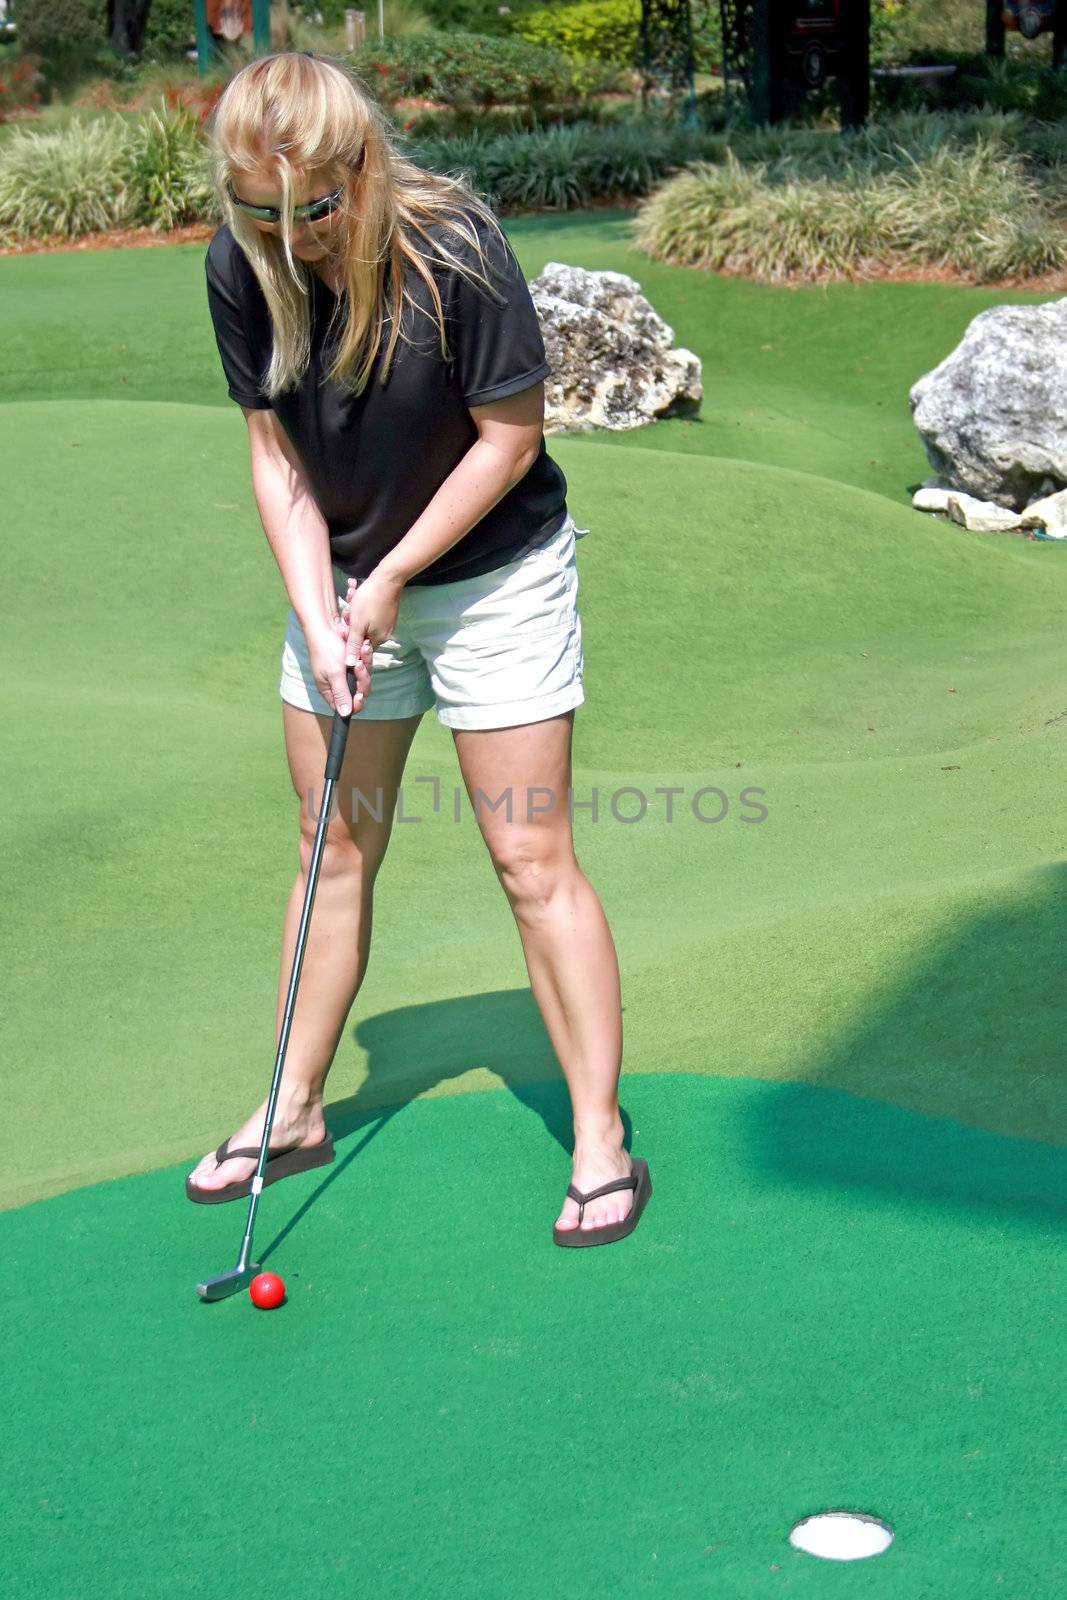 A woman ready to putt her golf ball